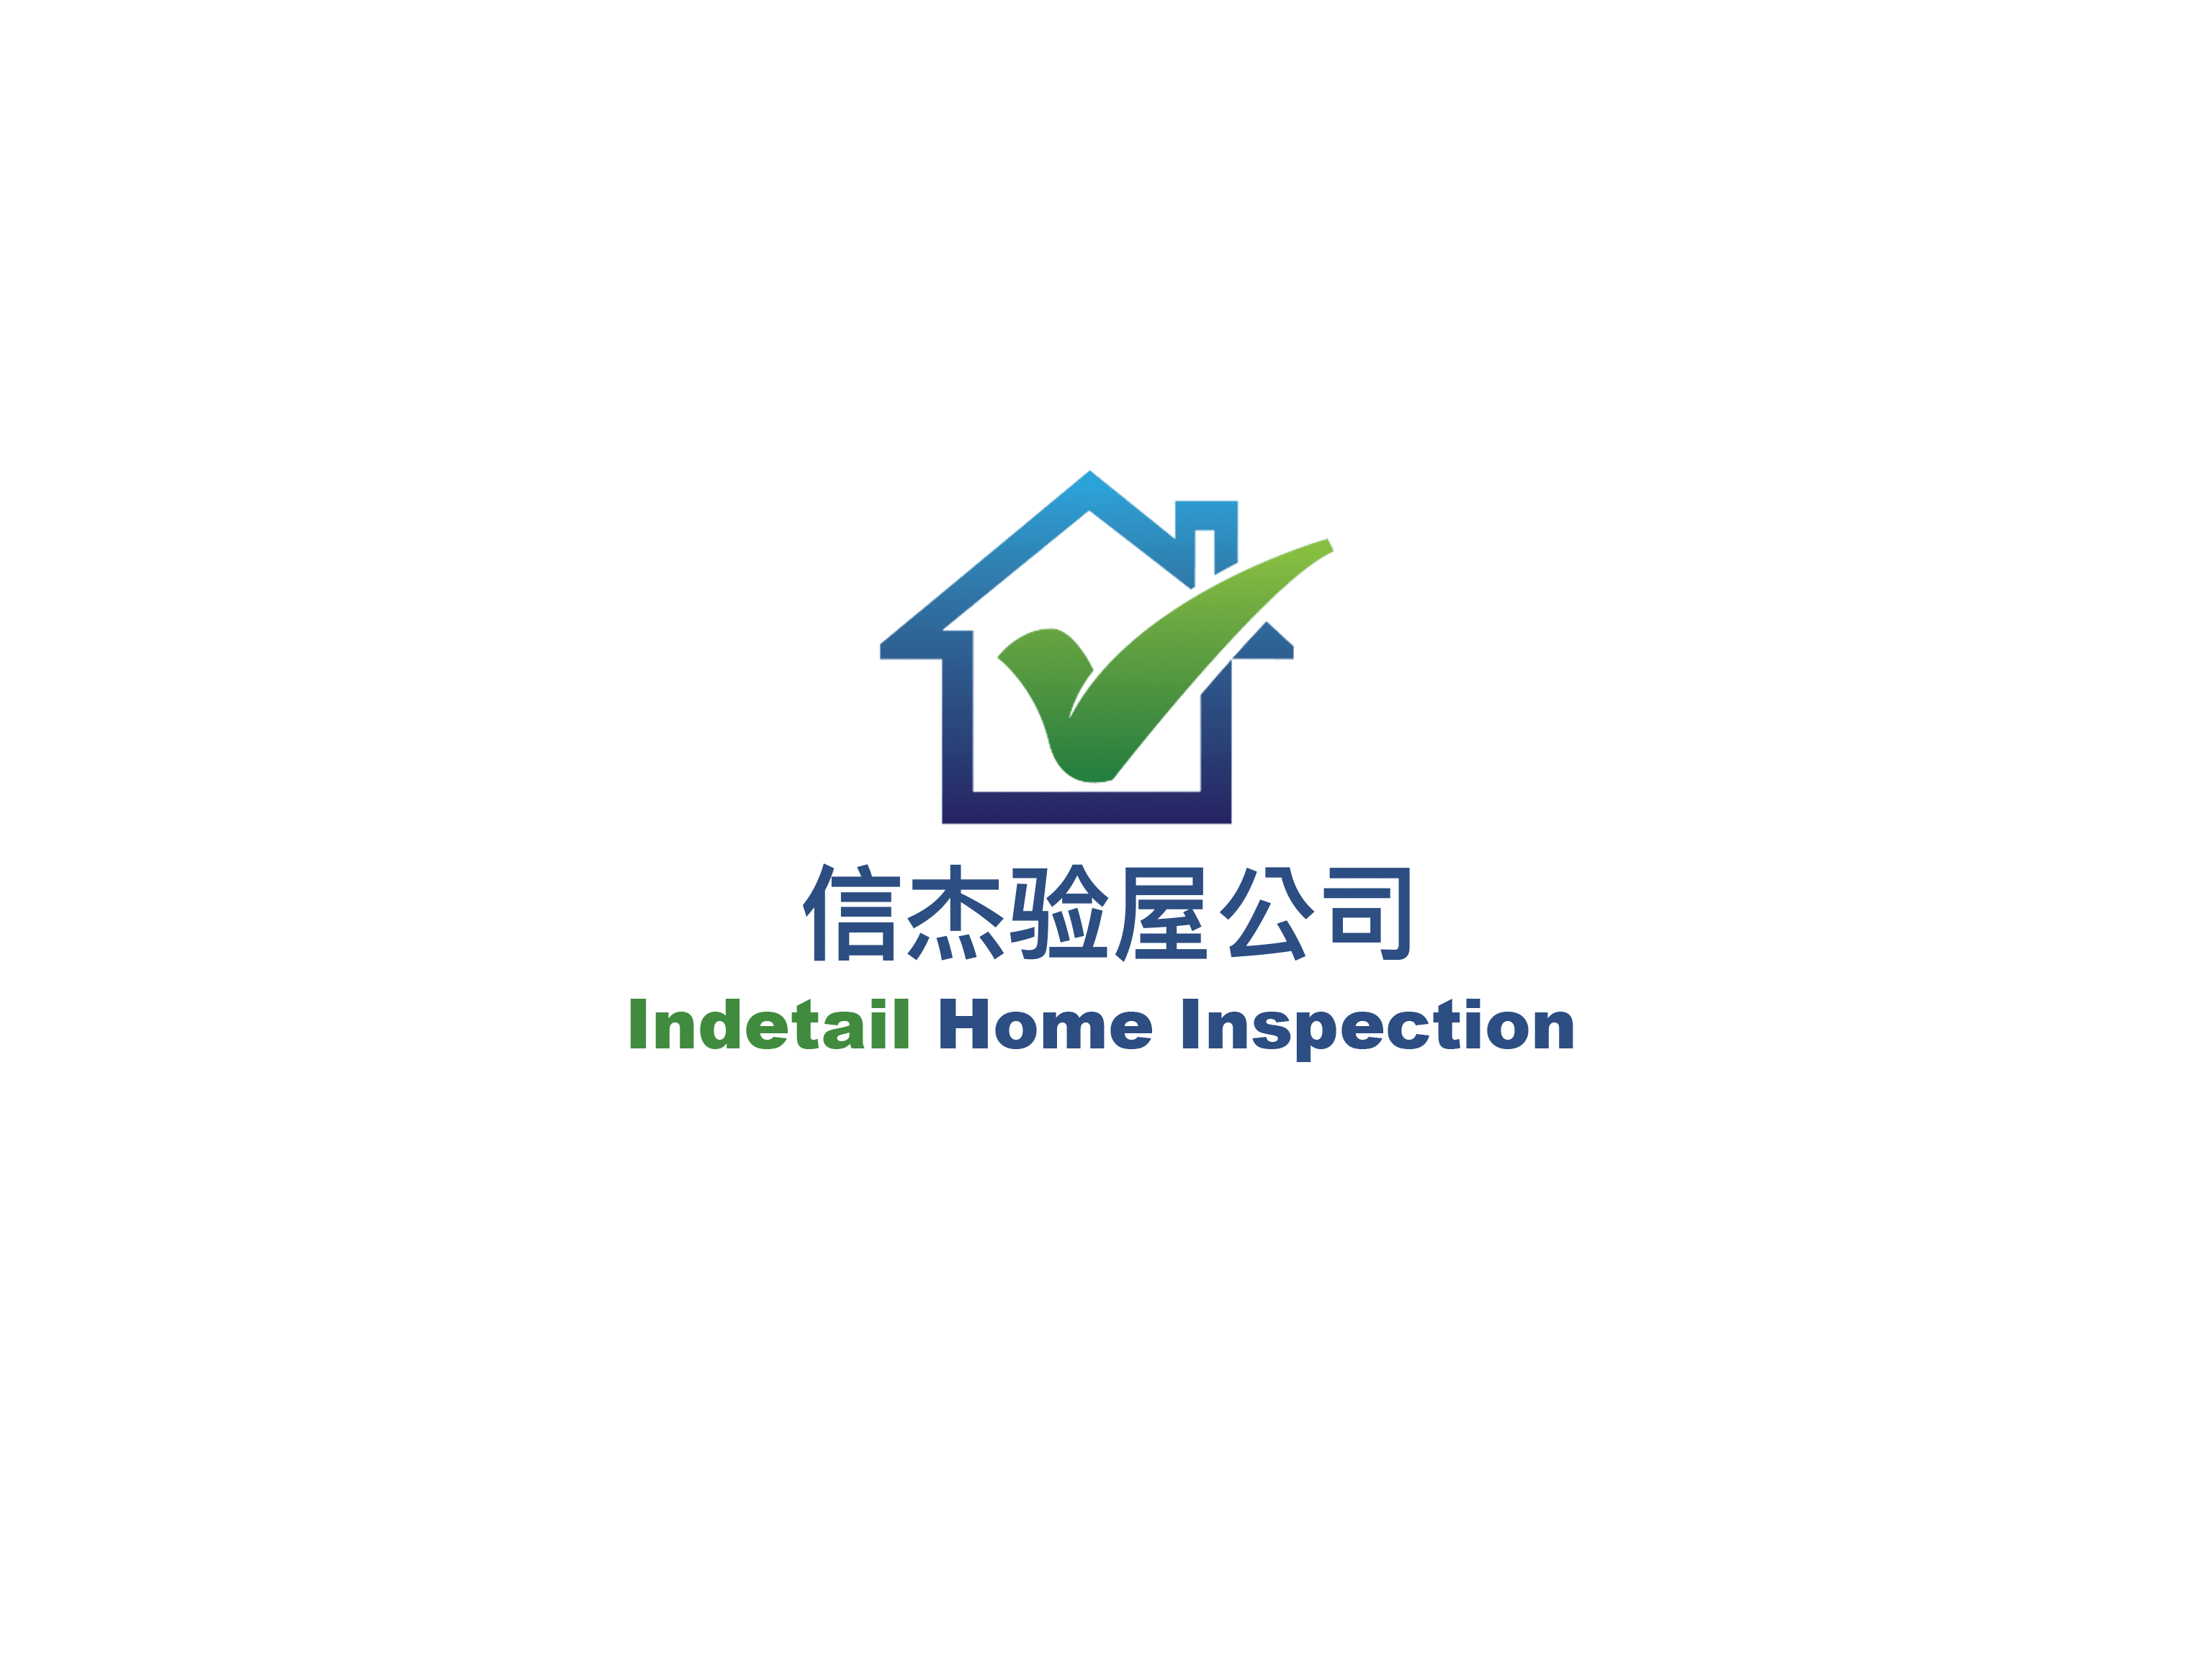 Indetail Home Inspection, LLC Logo